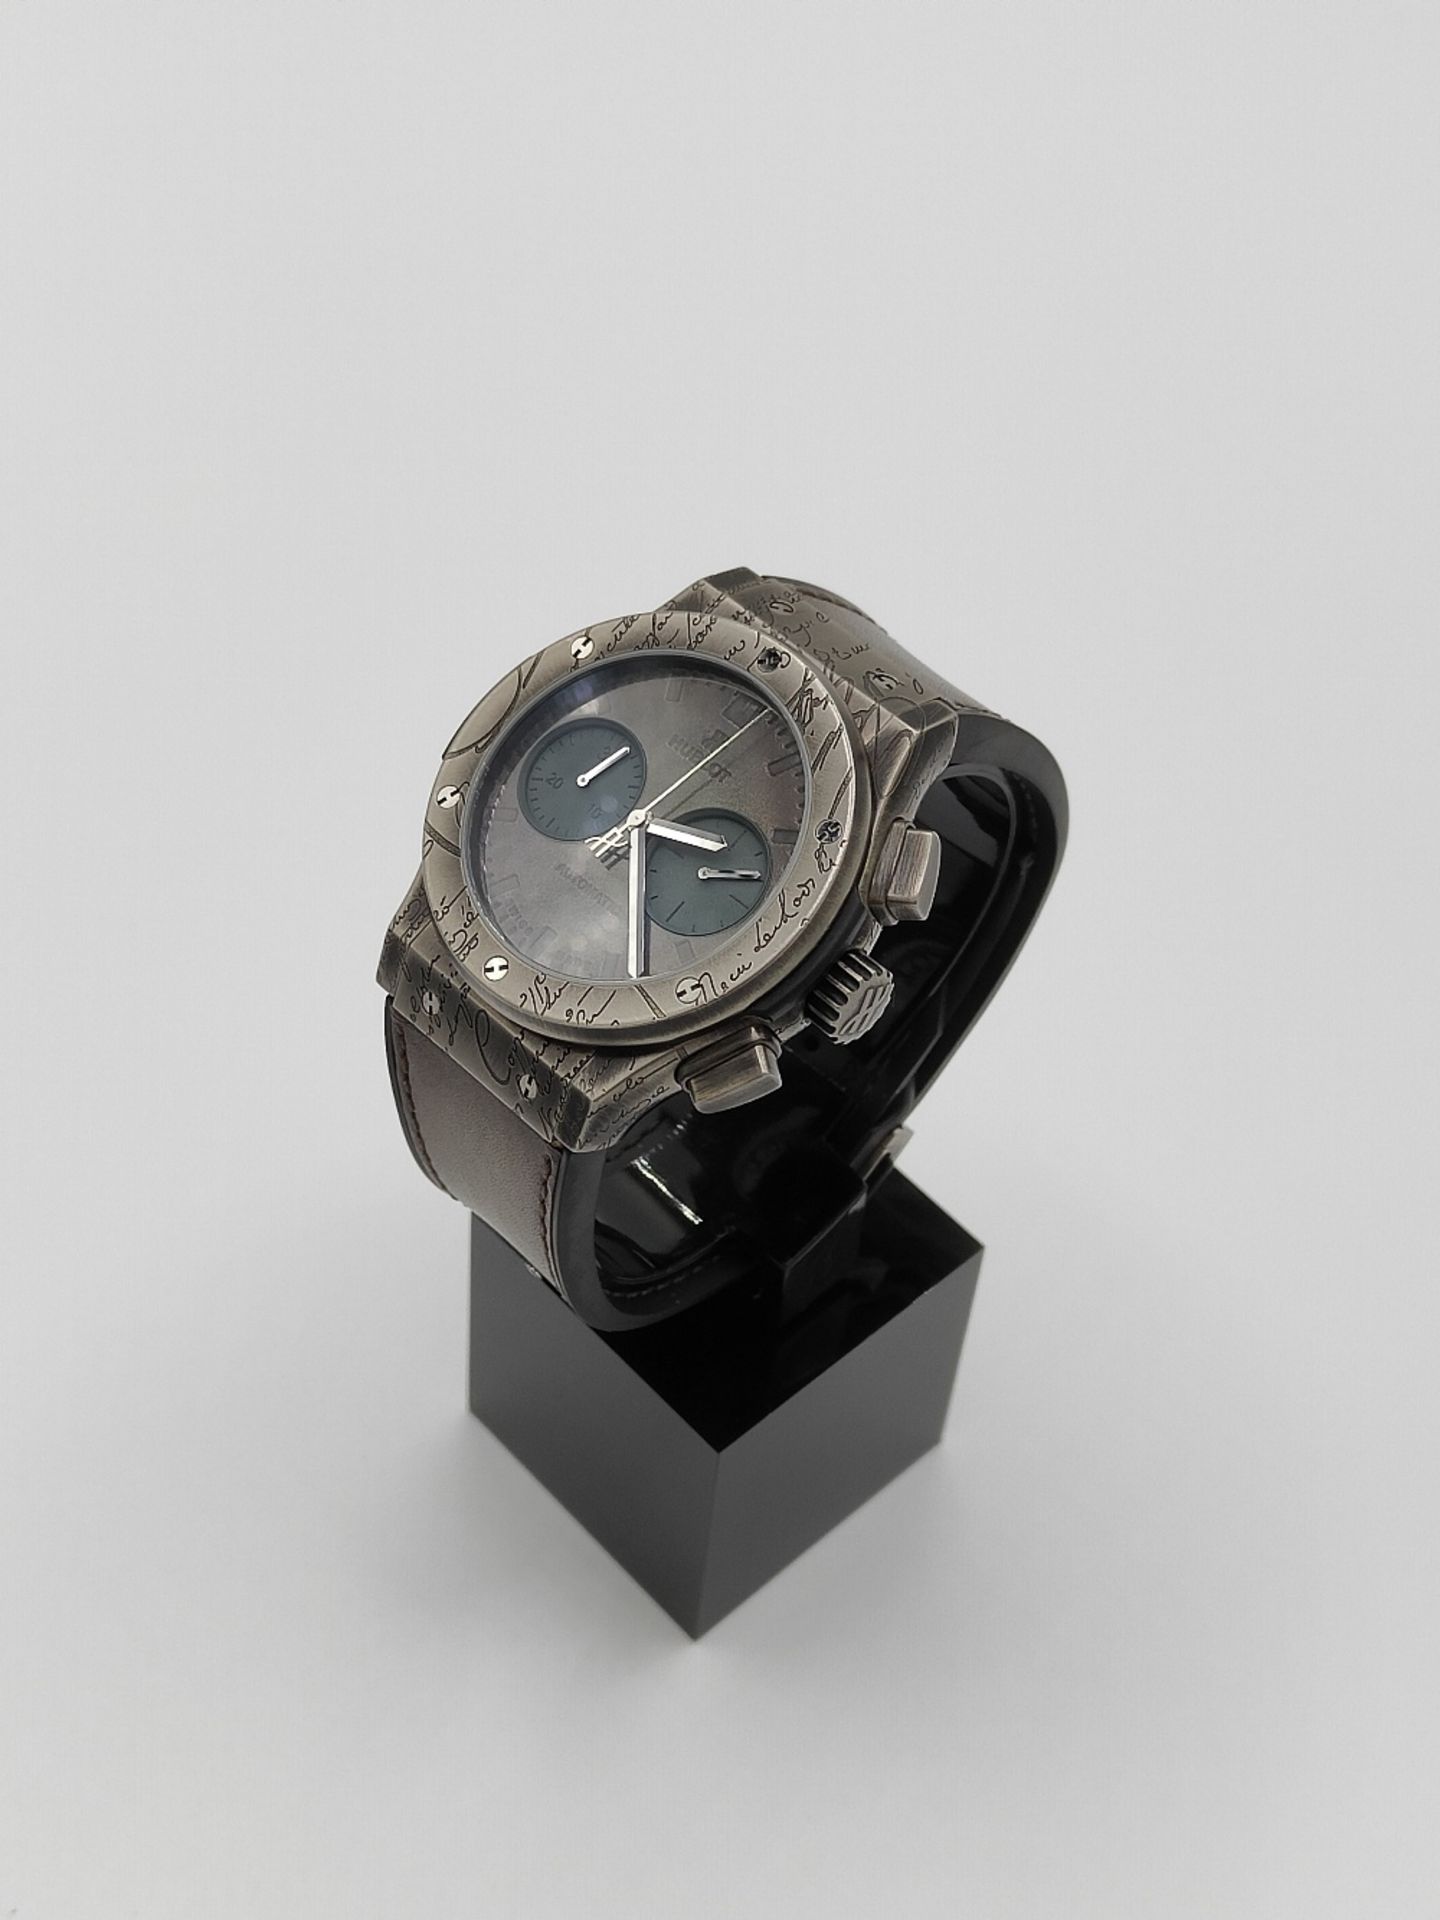 Hublot Berluti Classic Fusion Limited Edition Watch - Image 4 of 9